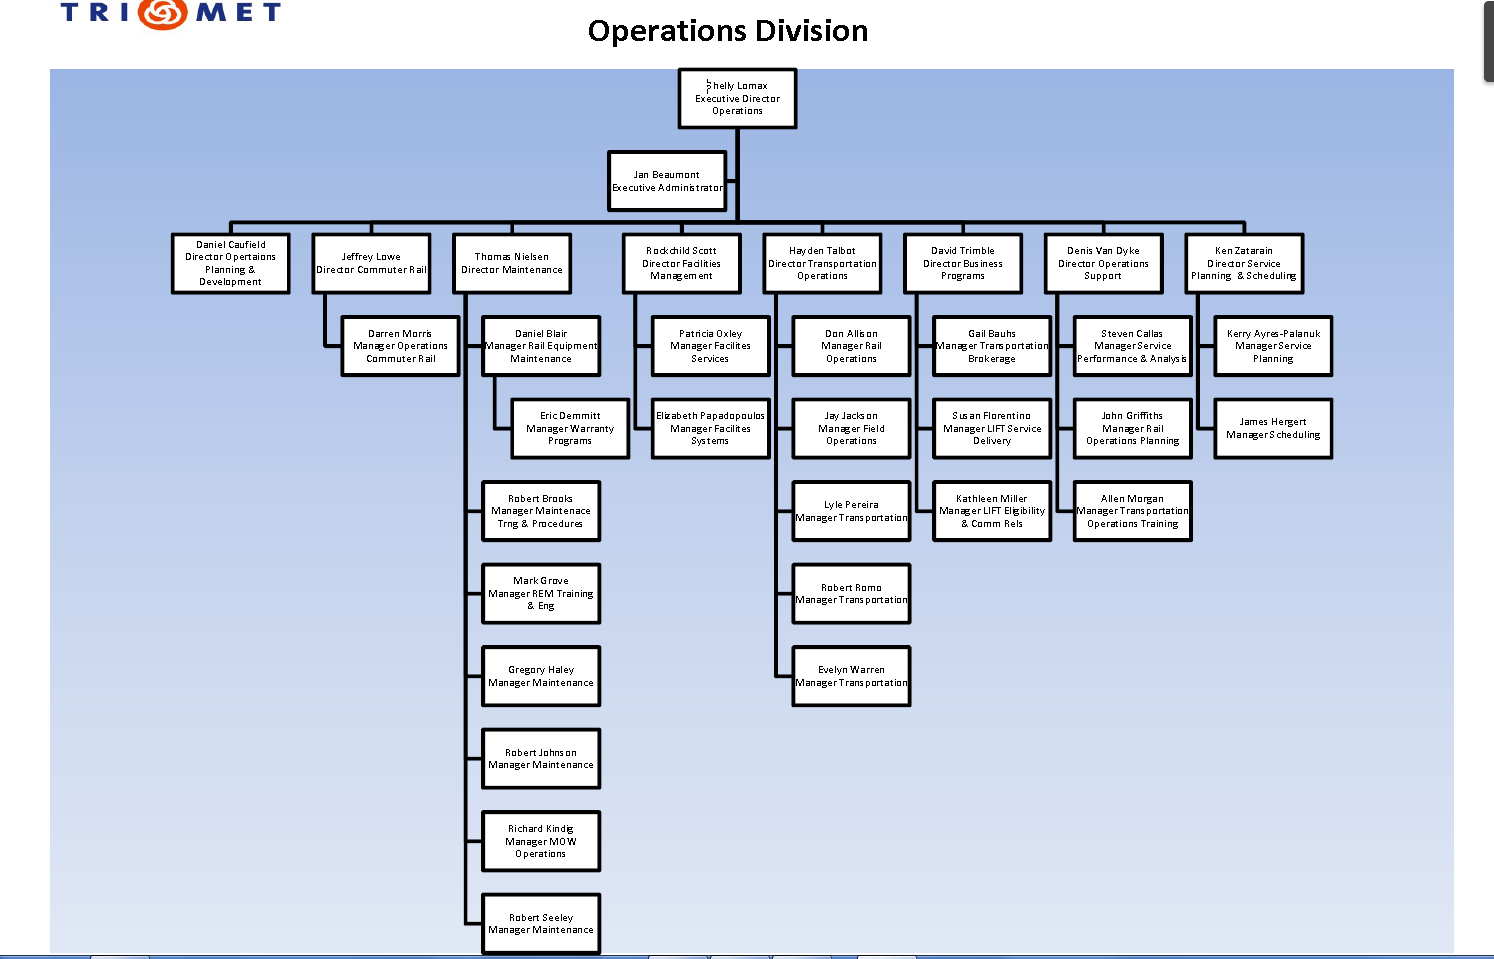 Trimet Organizational Chart